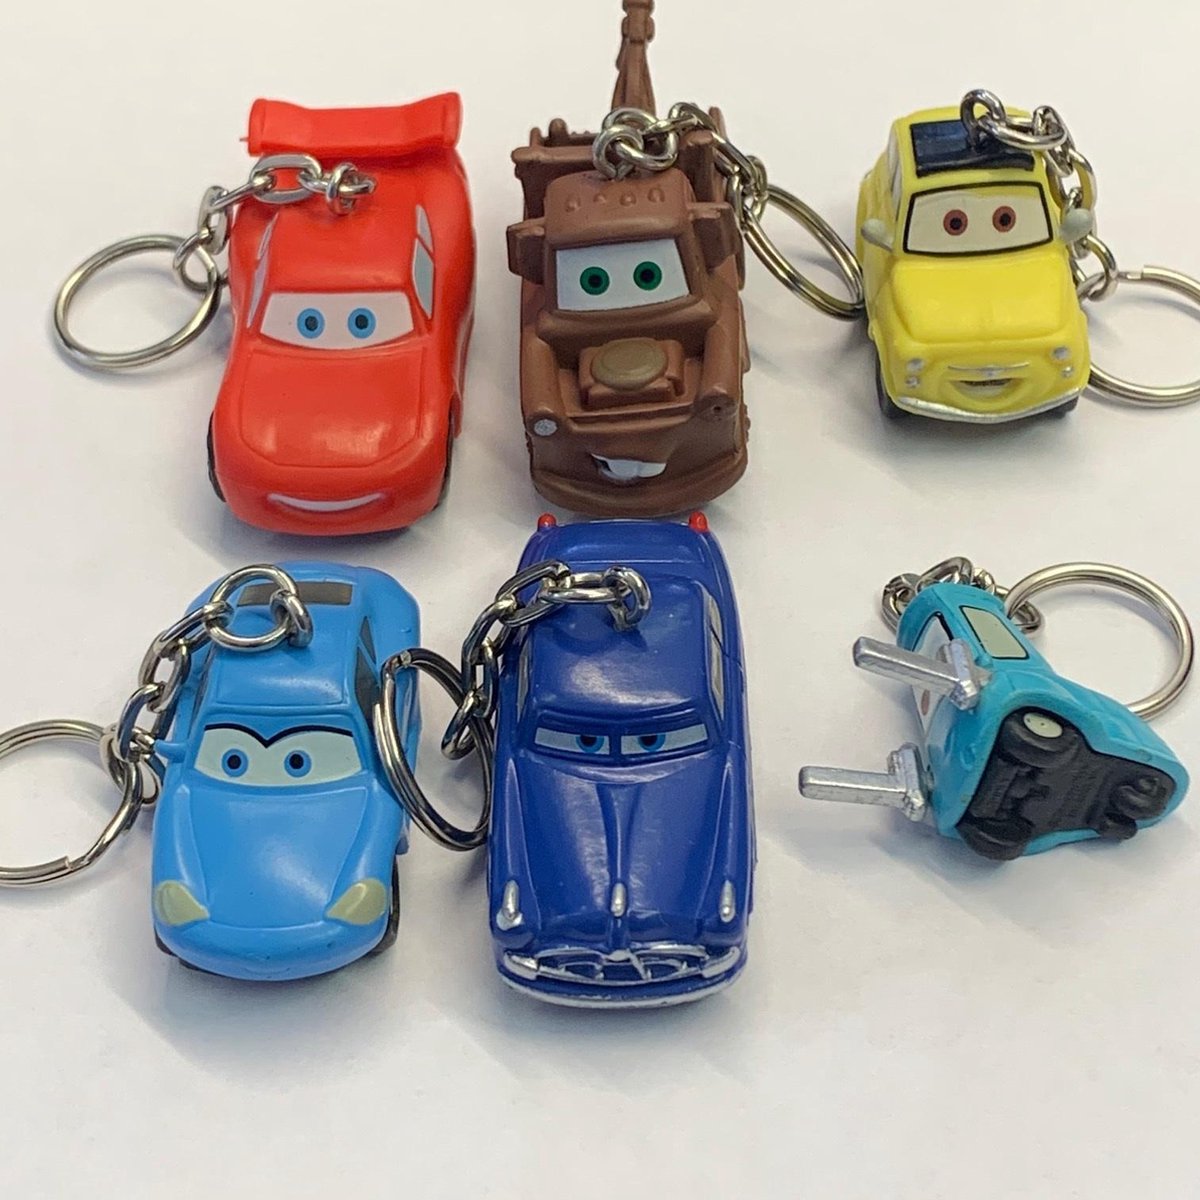 6x Disney Cars autootjes sleutelhangertjes mini (+/- 5 cm) - Disney Cars